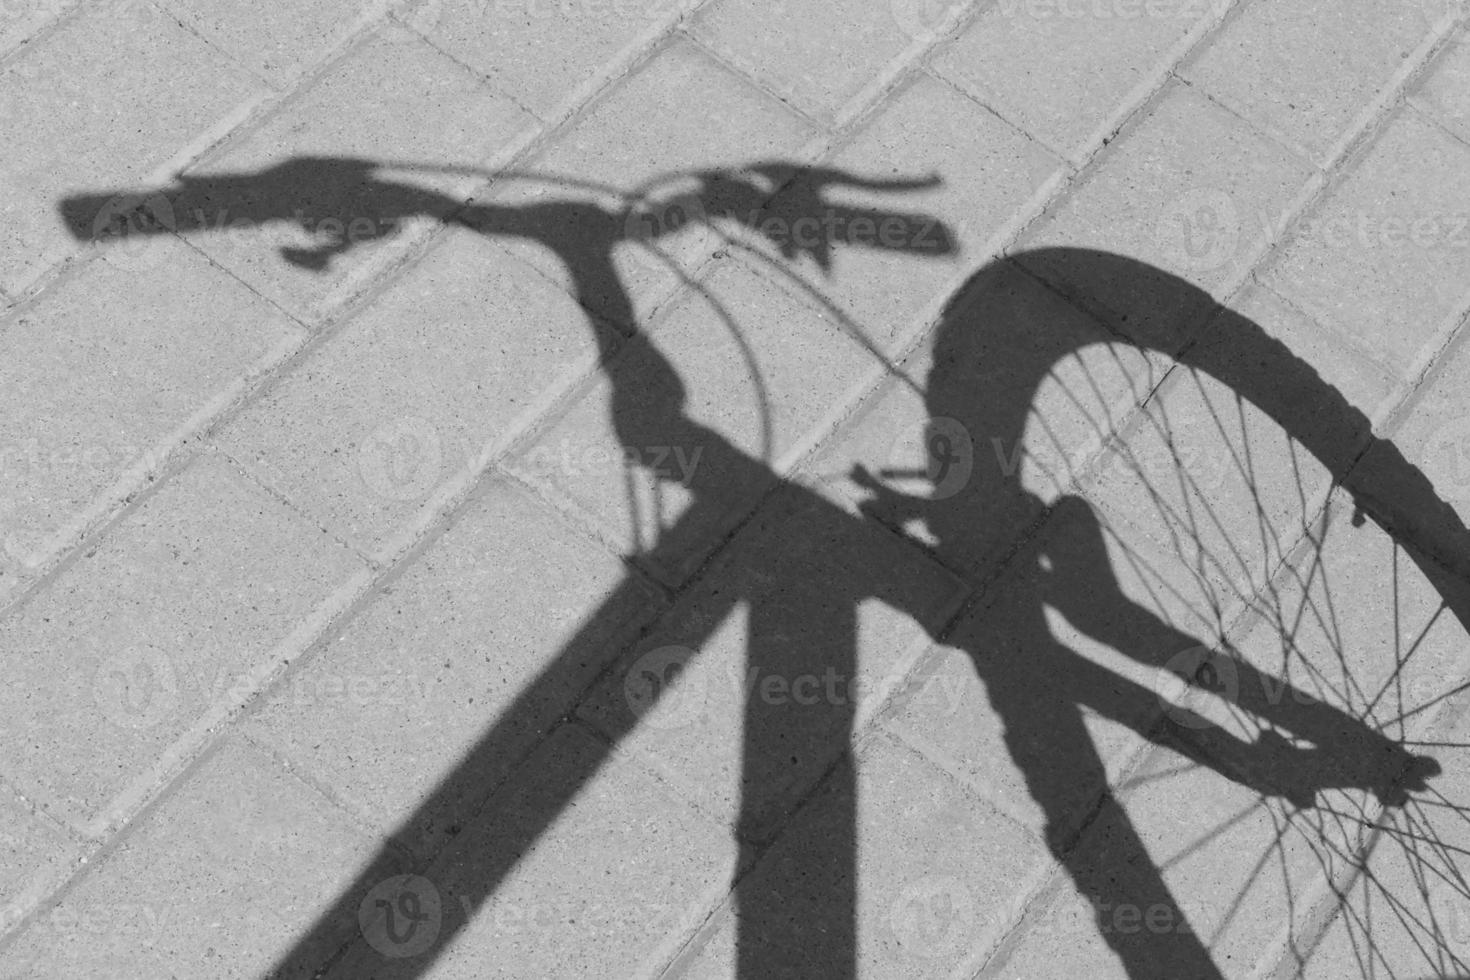 nero e bianca foto di ombra di stelo e davanti ruota di bicicletta